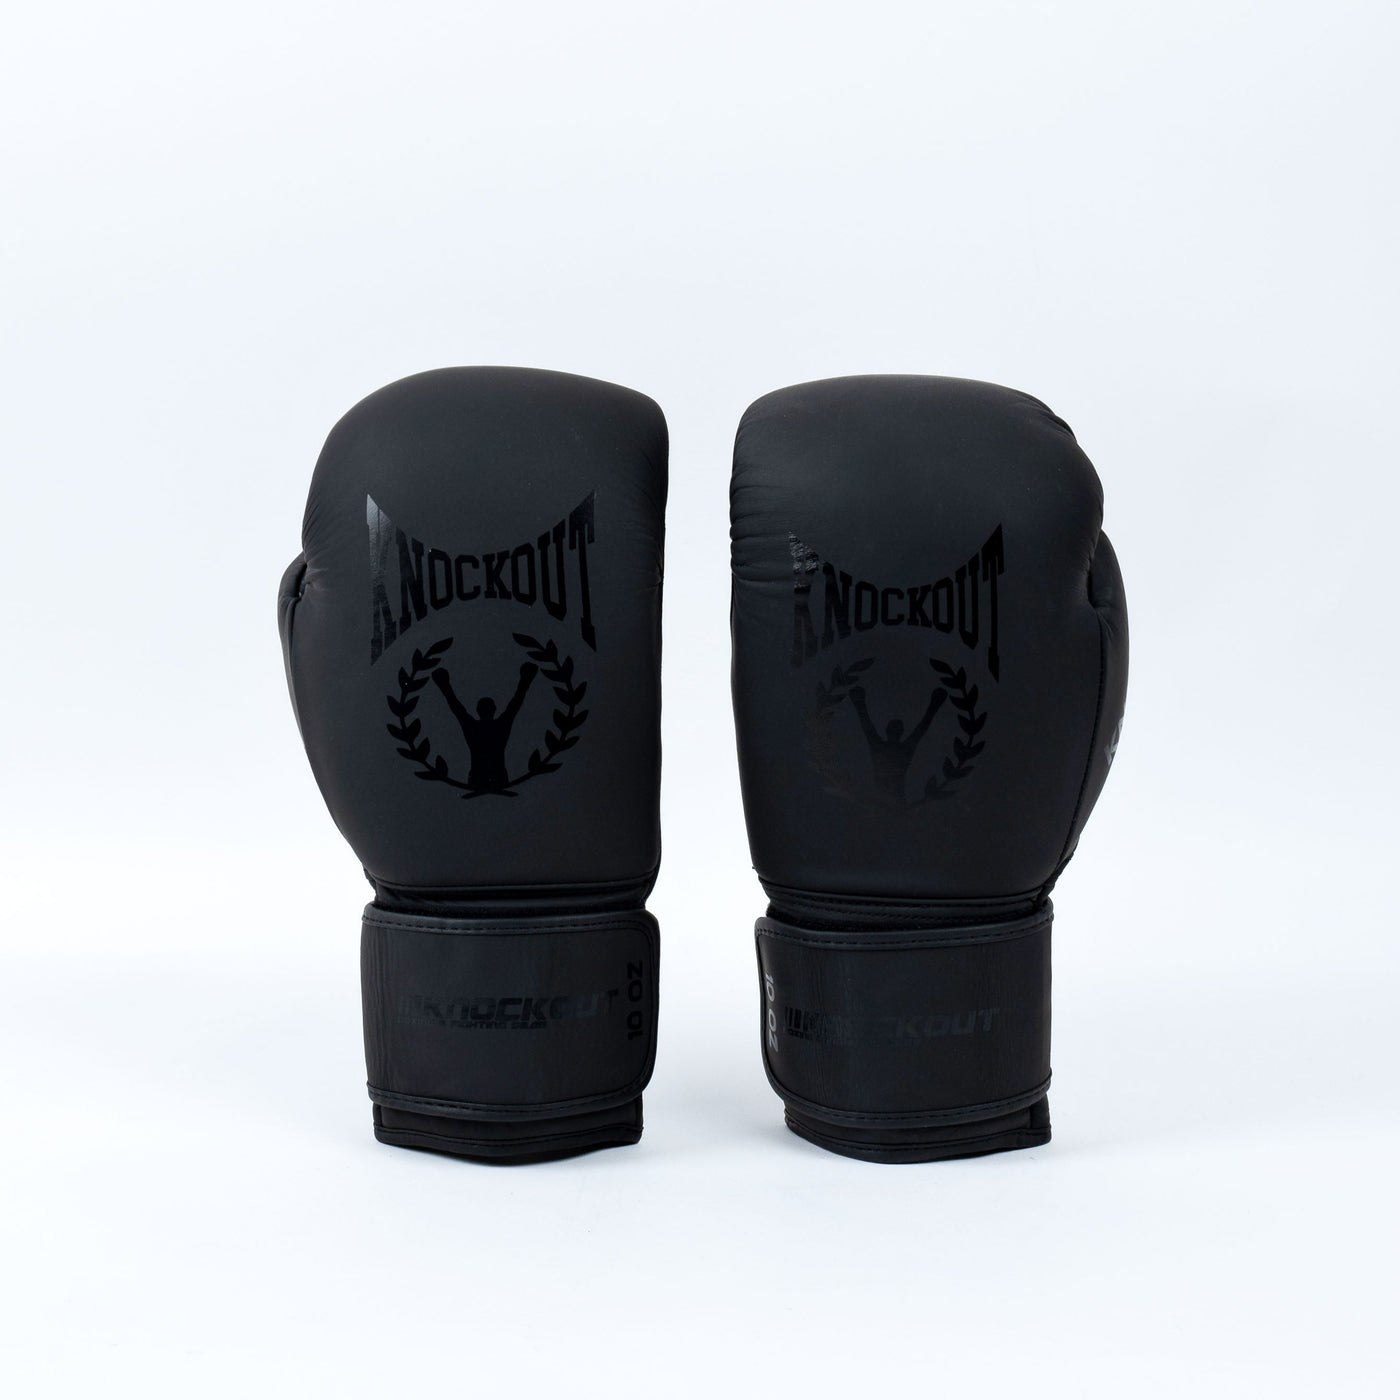 Mănuși Box Knockout Basic | knock-out.ro